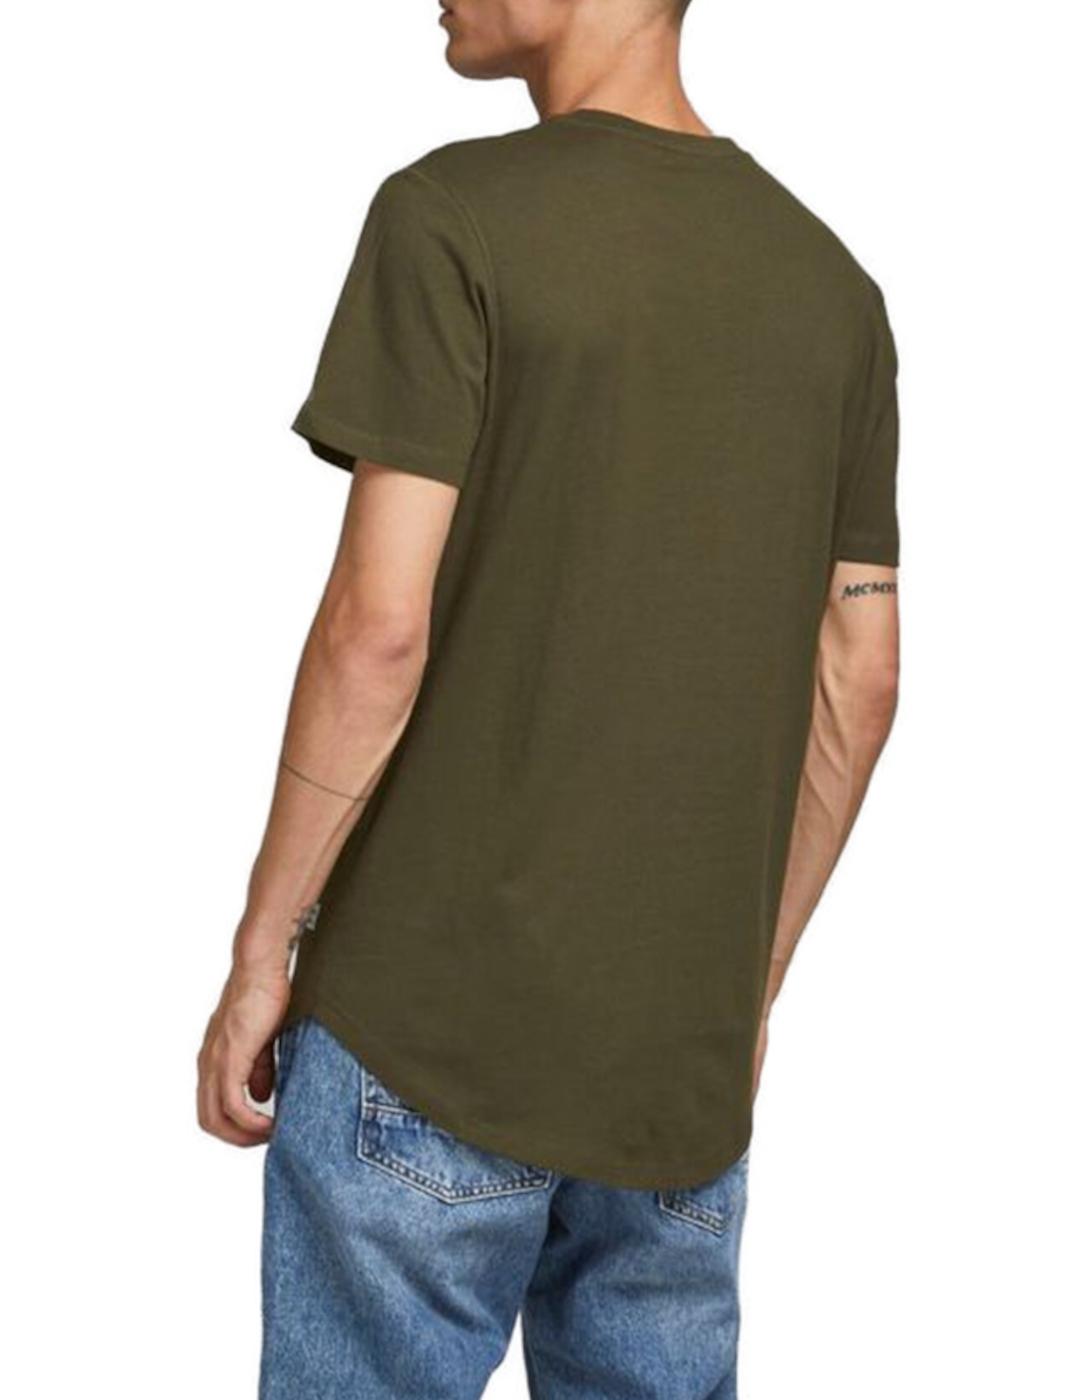 Camiseta Jack&Jones Enoa manga corta verde kaki para hombre